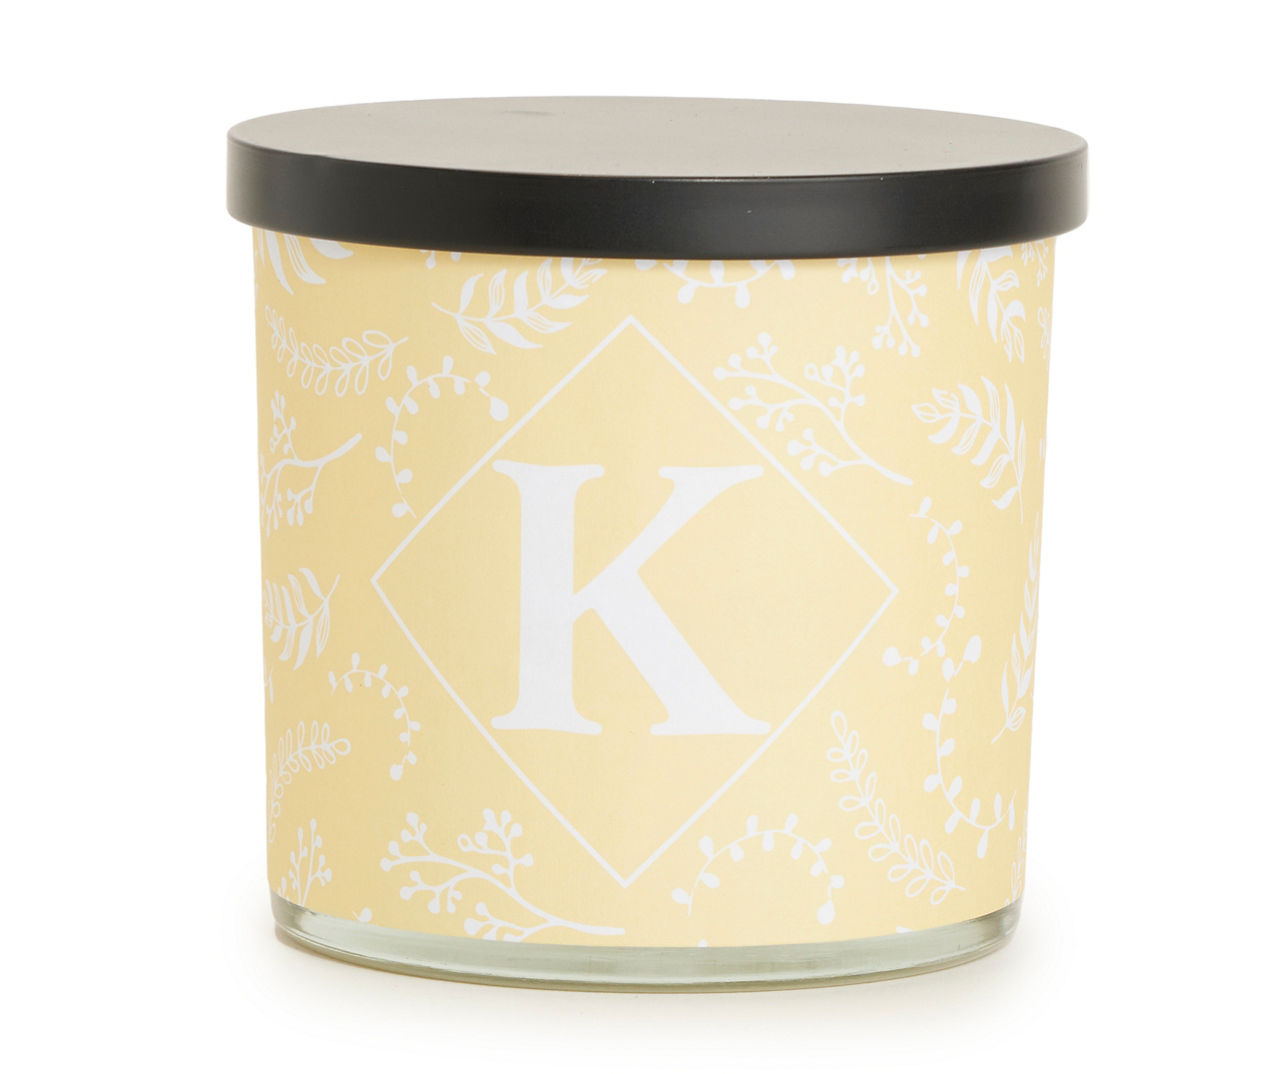 "K" Mandarin Honeysuckle Yellow & White Botanical Monogram Jar Candle, 14 oz.